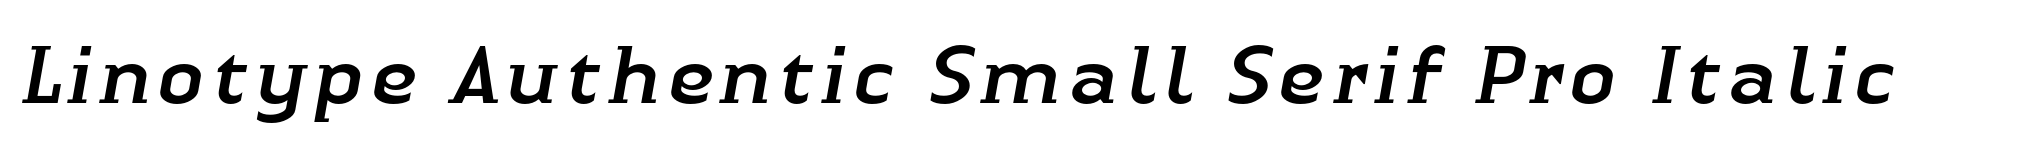 Linotype Authentic Small Serif Pro Italic image